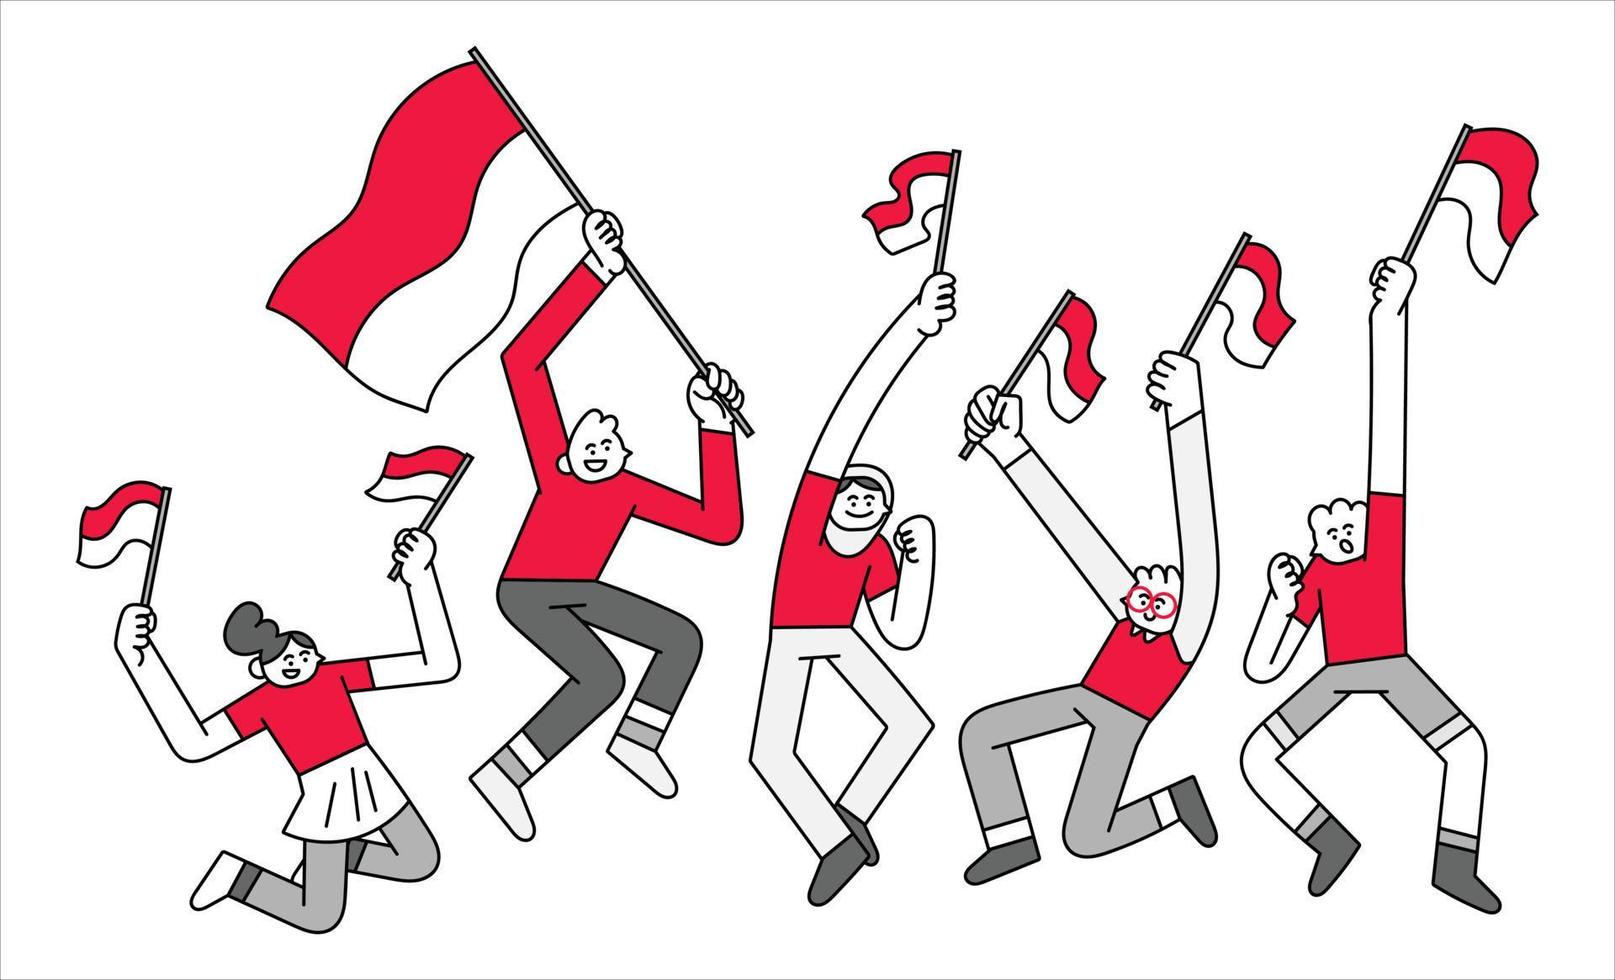 jong mensen jumping terwijl Holding vlaggen hand- getrokken karakter illustratie vector